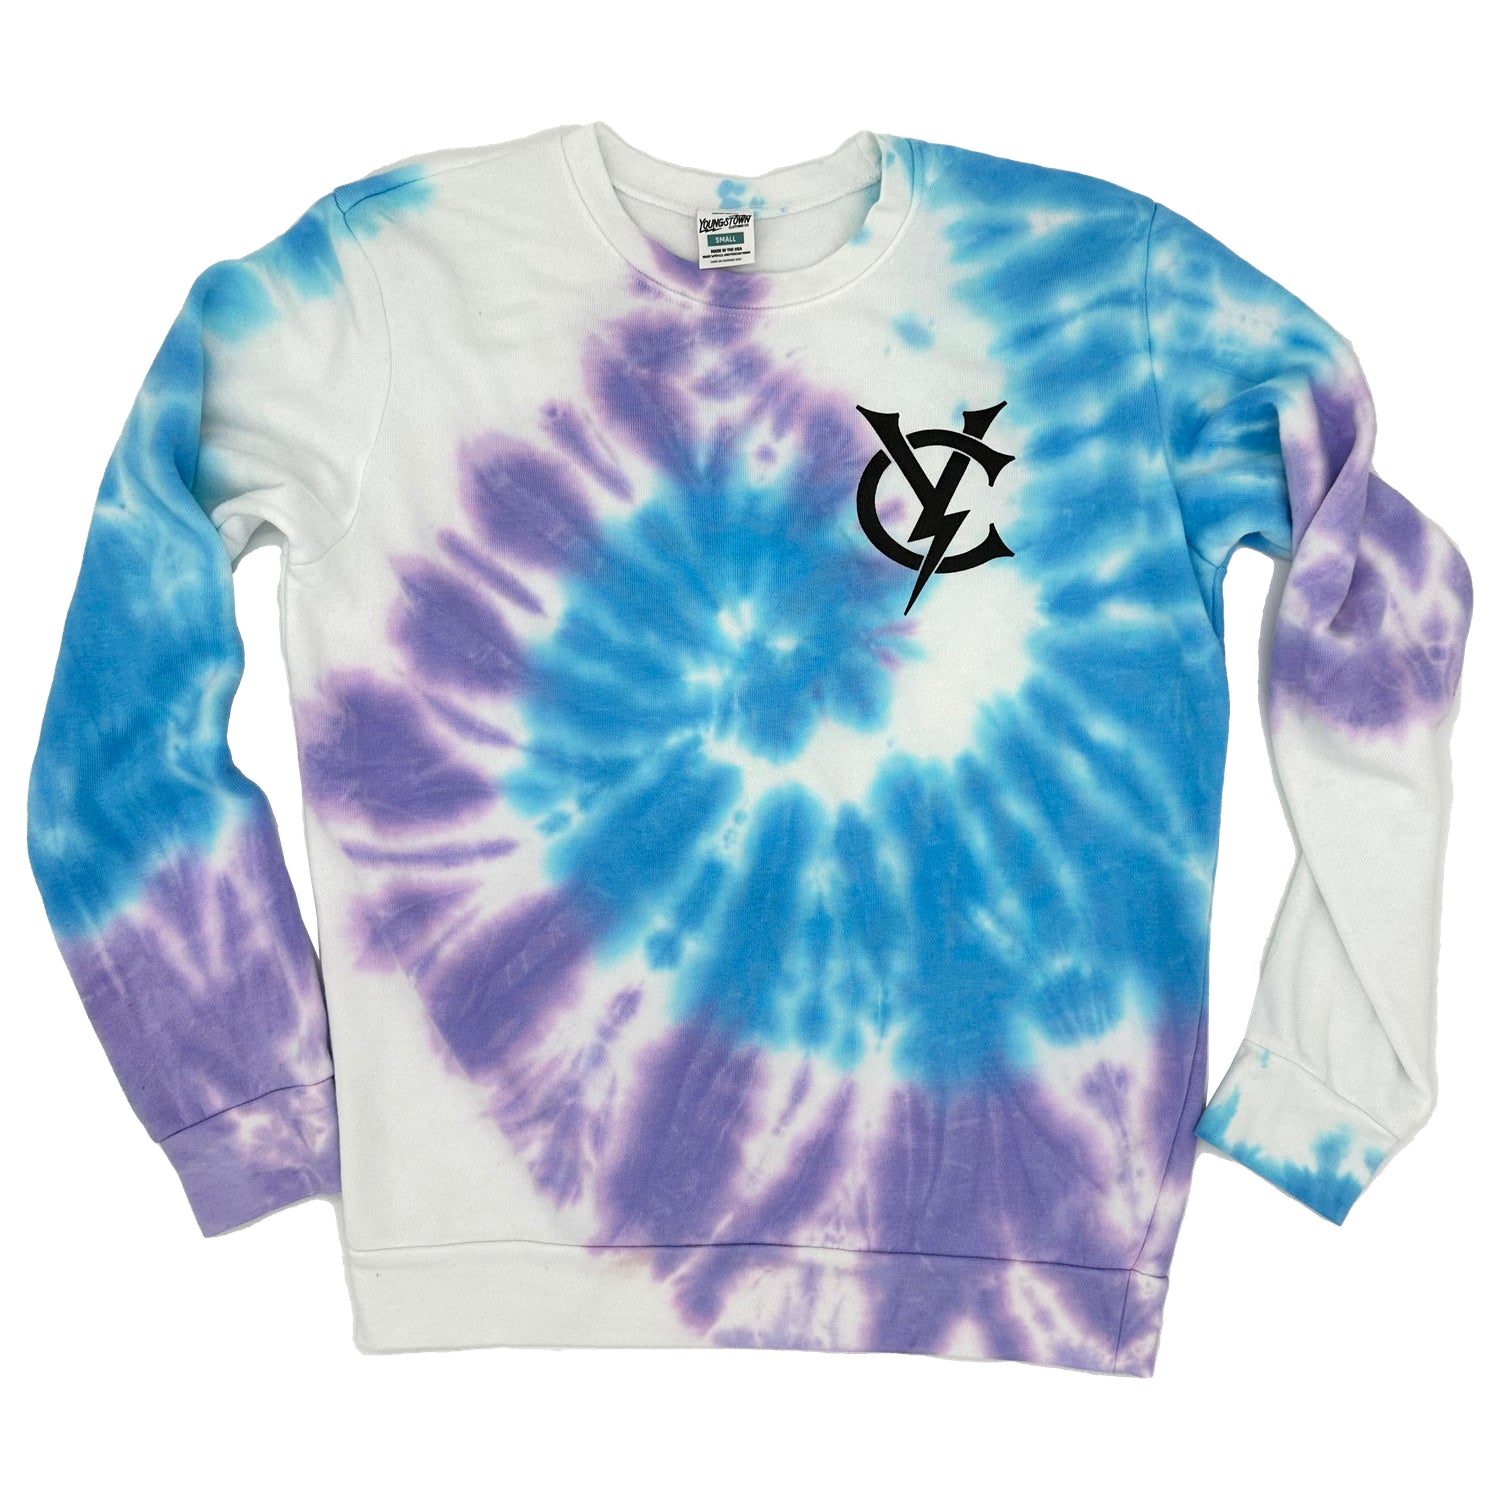 Tie-Dye Monogram Sweatshirt (Cotton Candy) – Youngstown Clothing Co